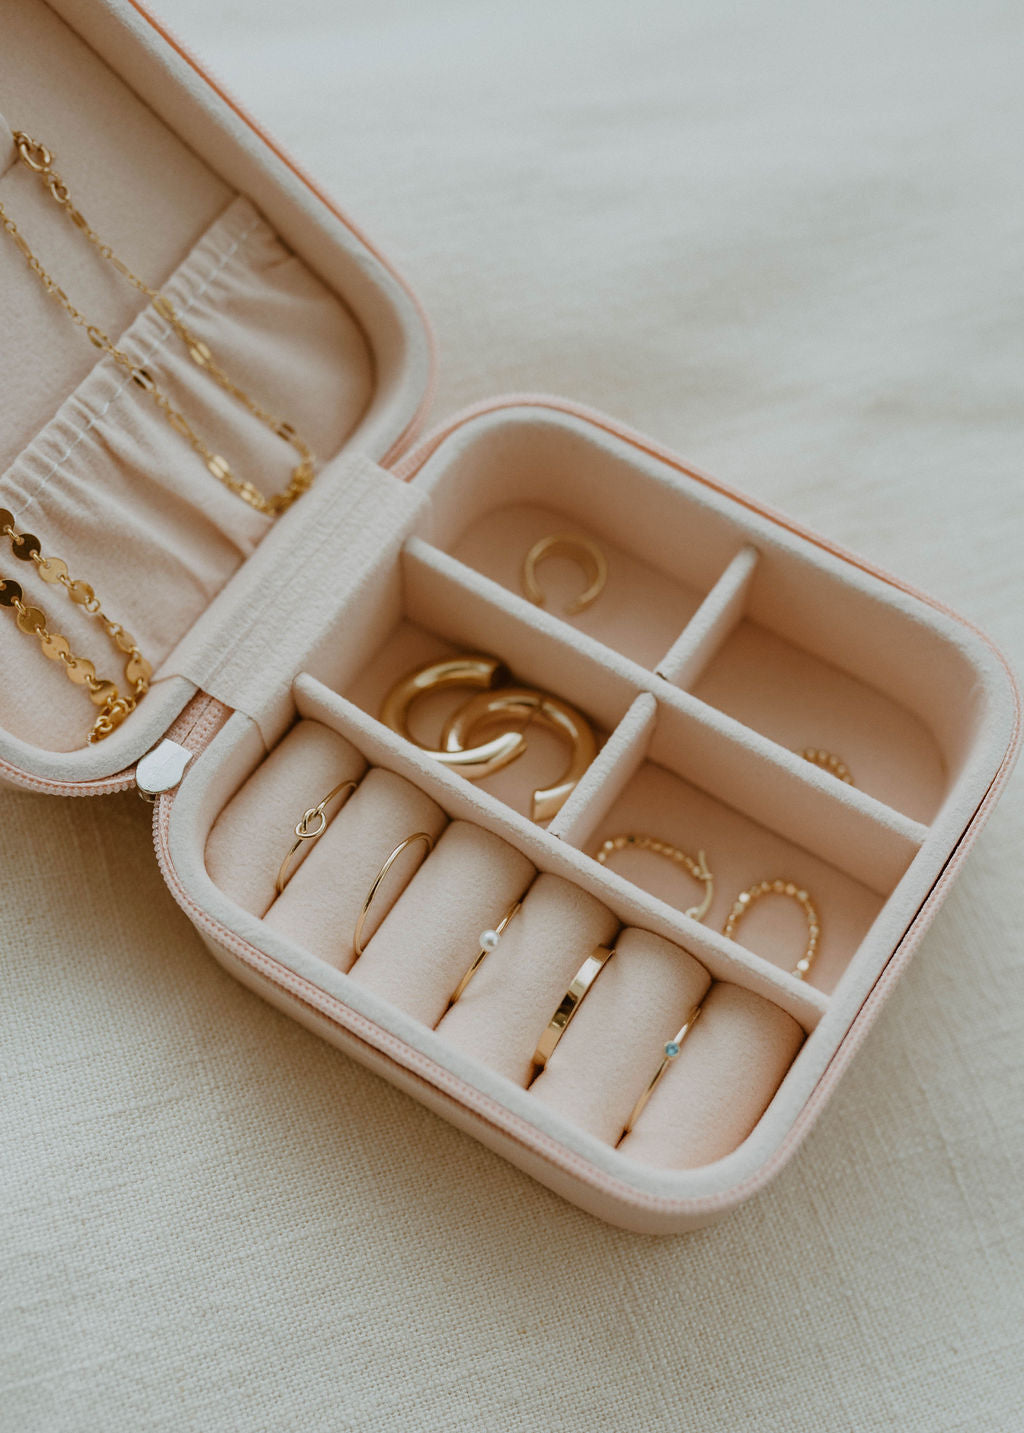 The Golden Mae Jewelry Box